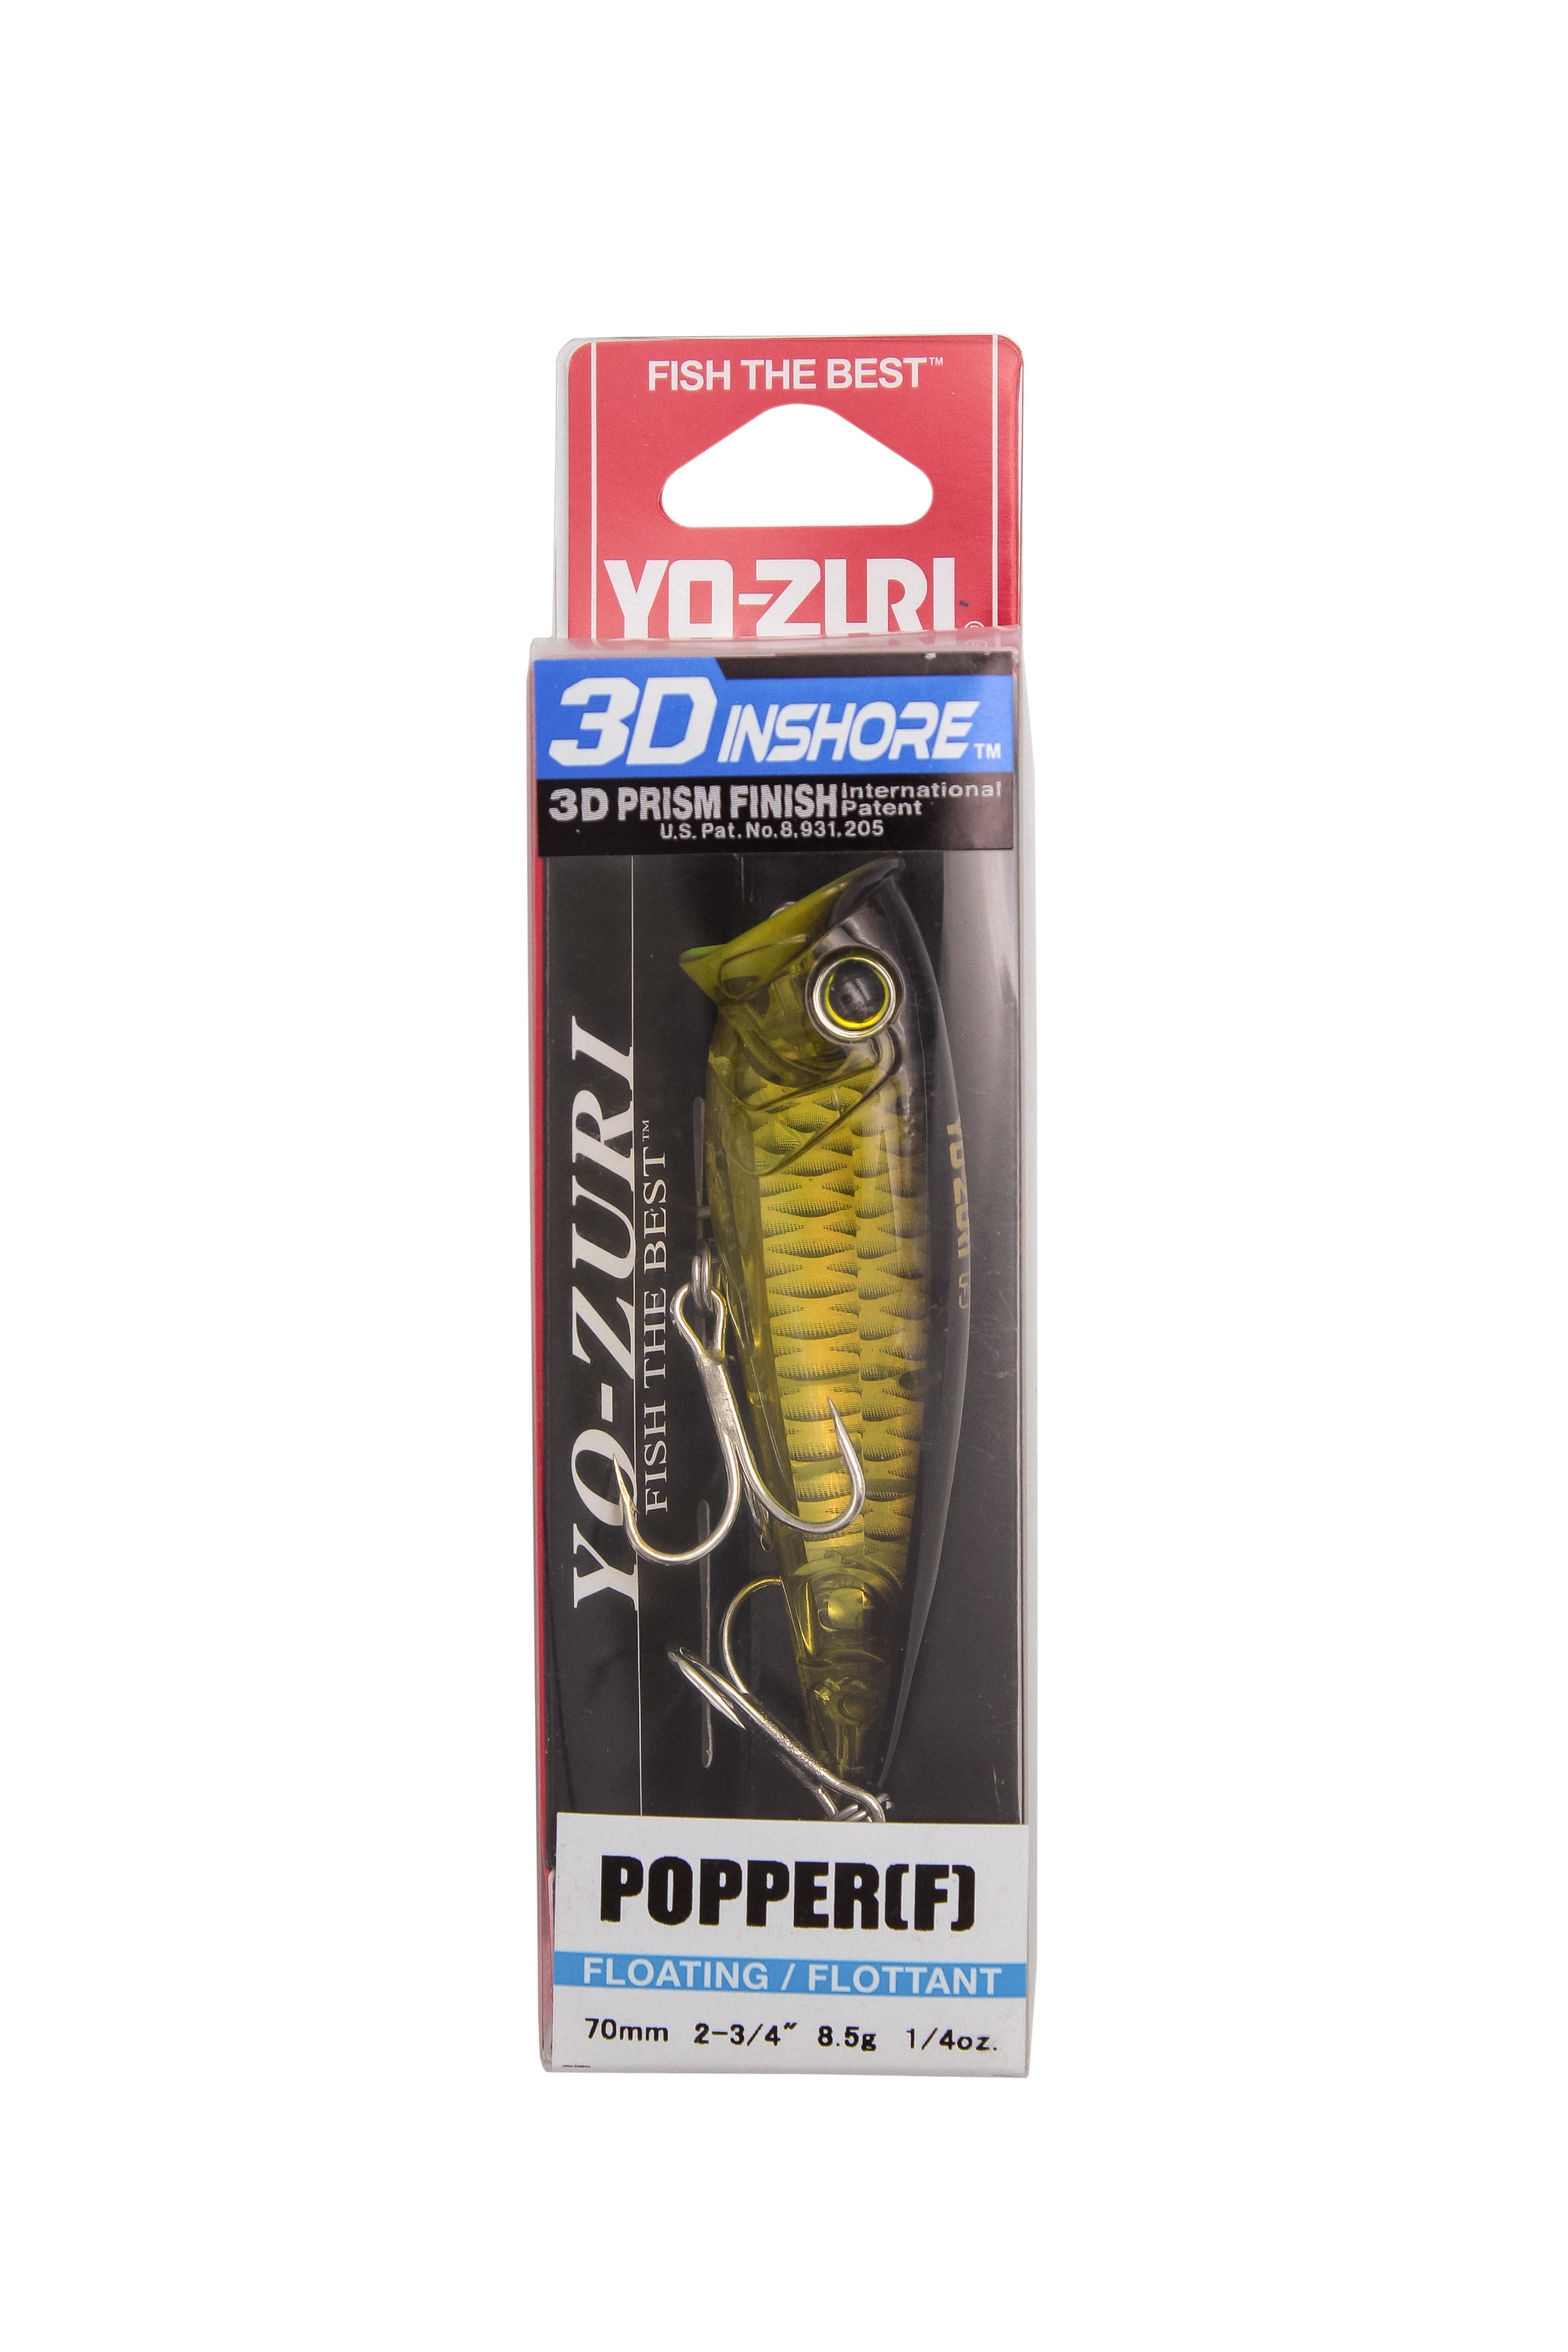 Воблер Yo-Zuri 3D Inshore popper F 70мм R1210 HGBL - фото 1